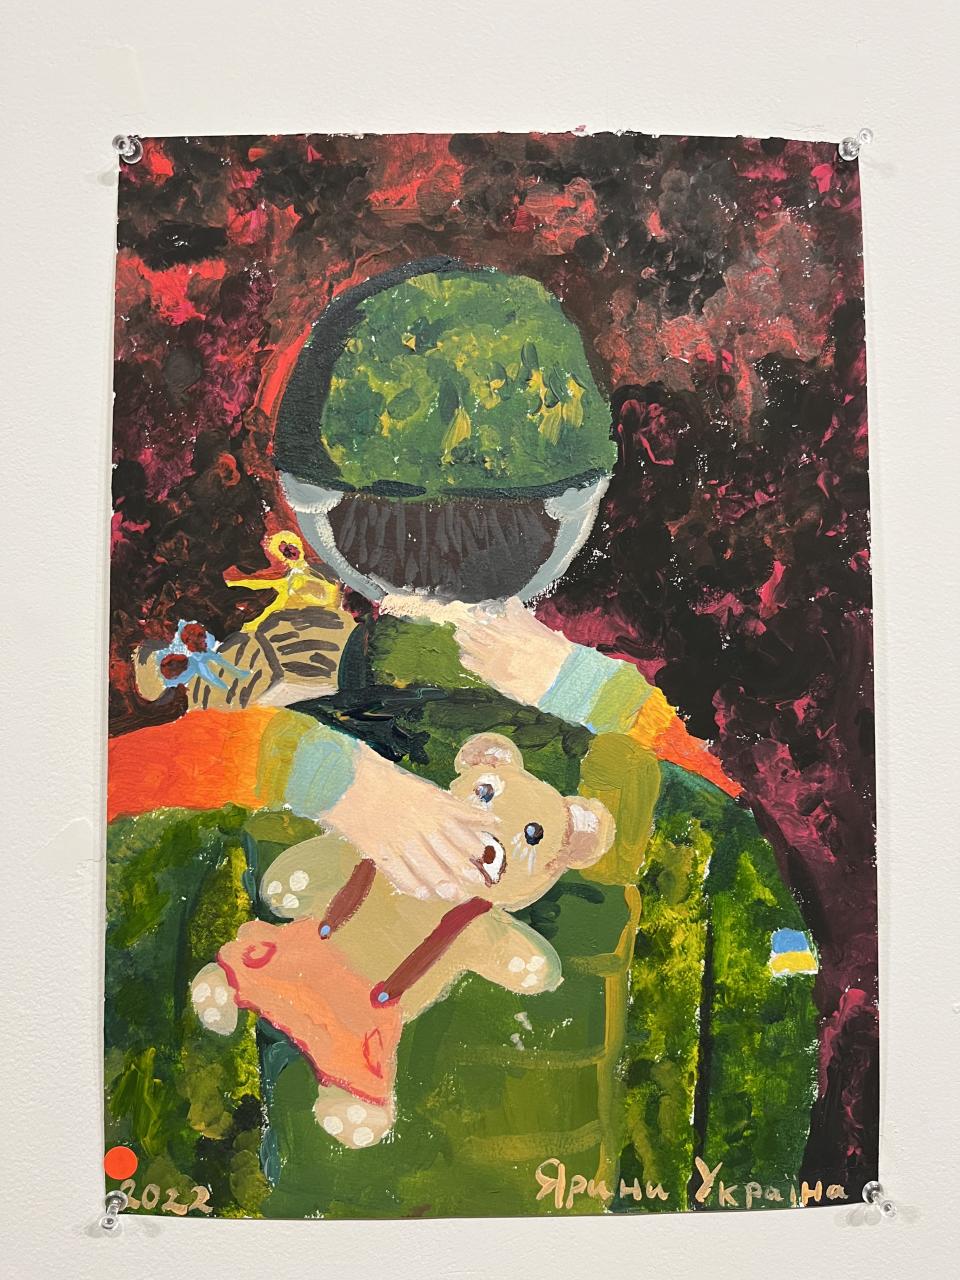 An artwork of a Ukrainian soldier carrying a child holding a teddy bear